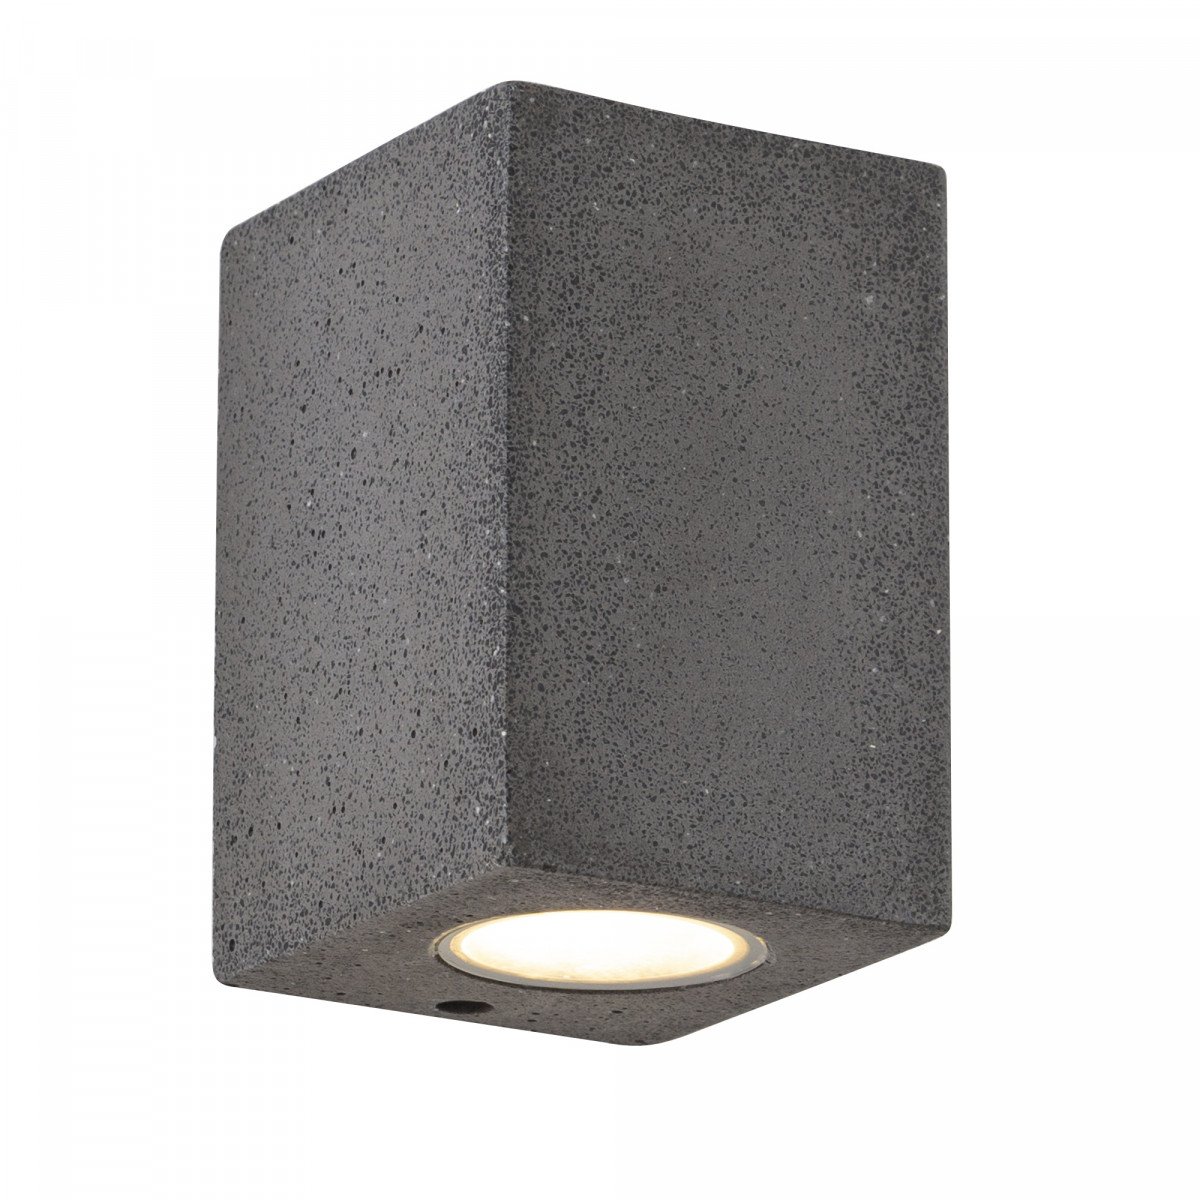 Pure Down wandlamp downlighter beton in zwarte kleur